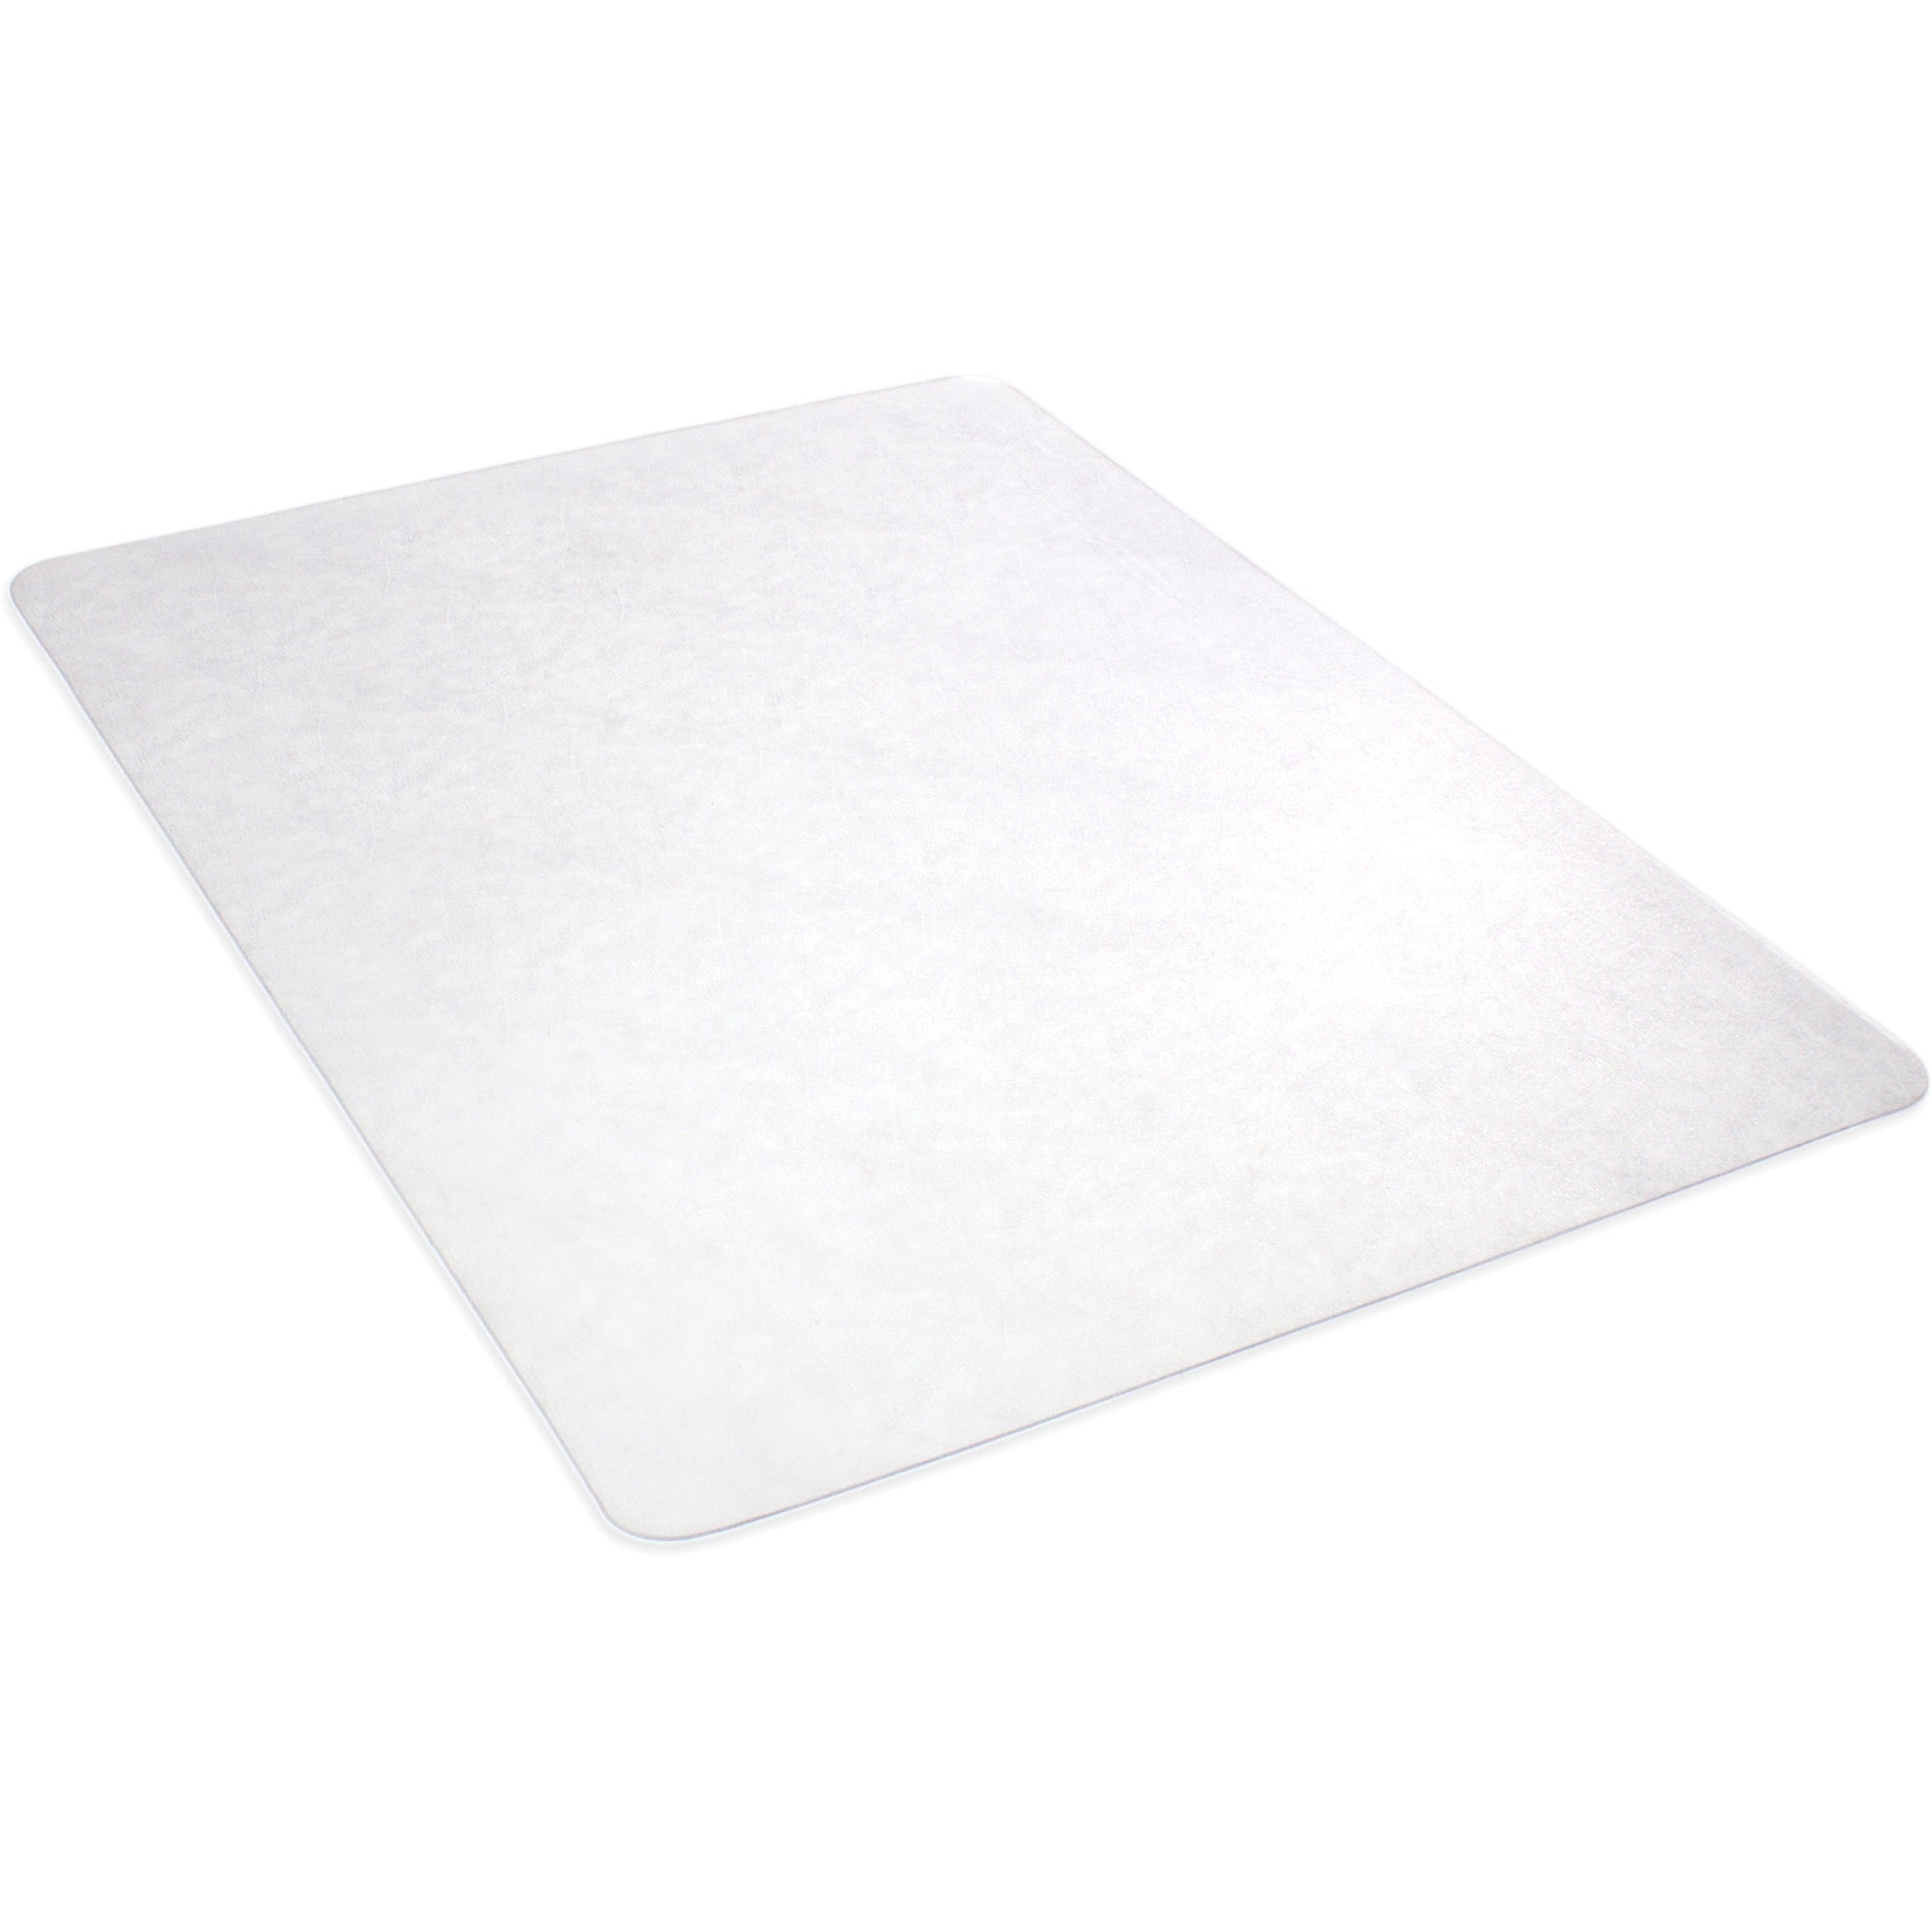 deflecto-duomat-multi-surface-chairmat-carpet-hard-floor-60-length-x-46-width-rectangular-classic-clear-1each_defcm23442fduo - 3